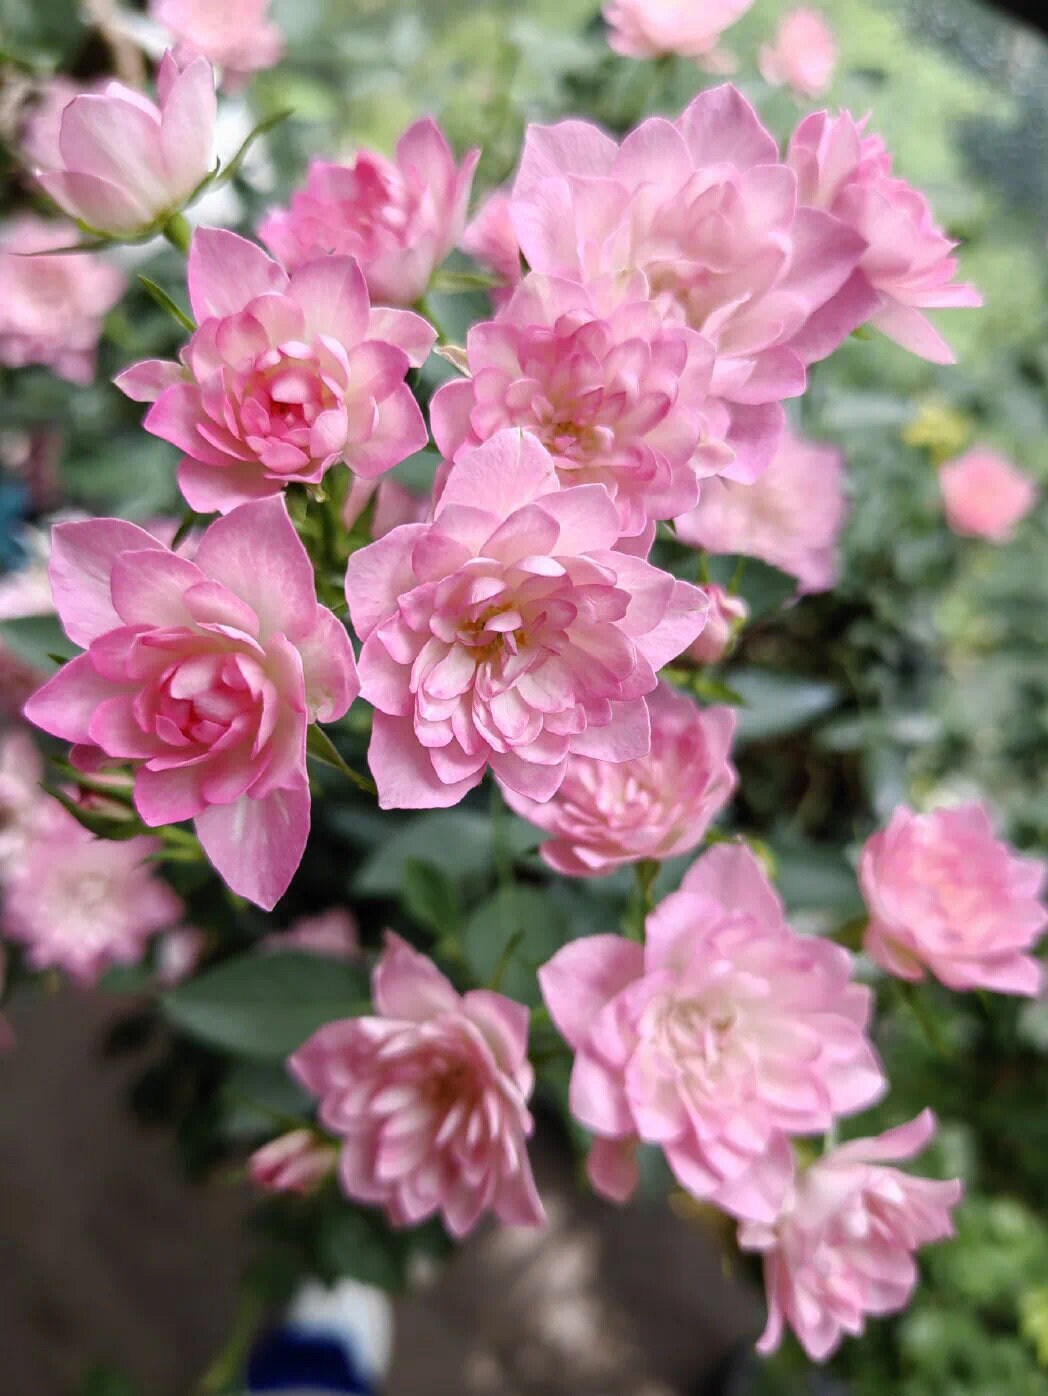 Mini Rose【Astro Sky|アストロスカイ】-1 Gal + OwnRoot Live Plant｜Lotus bloom| Abundant flowering|Blooms Abundantly| 天荷繁星|Strong Disease Resistance